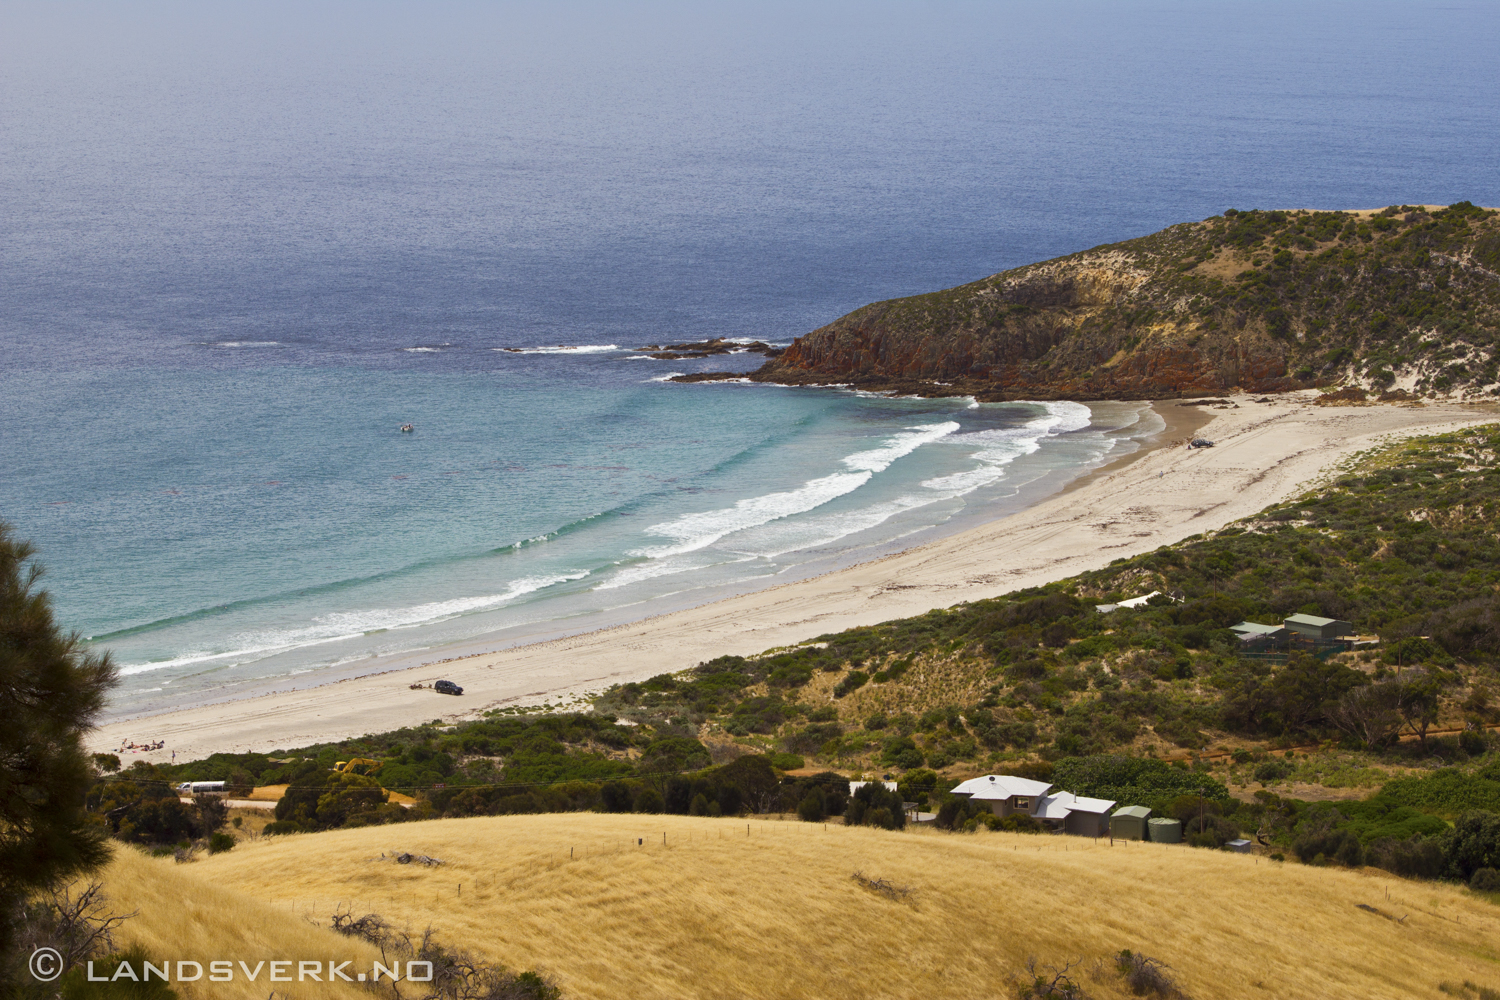 Kangaroo Island. 

(Canon EOS 550D / Sigma 70-200mm F2.8 OS)